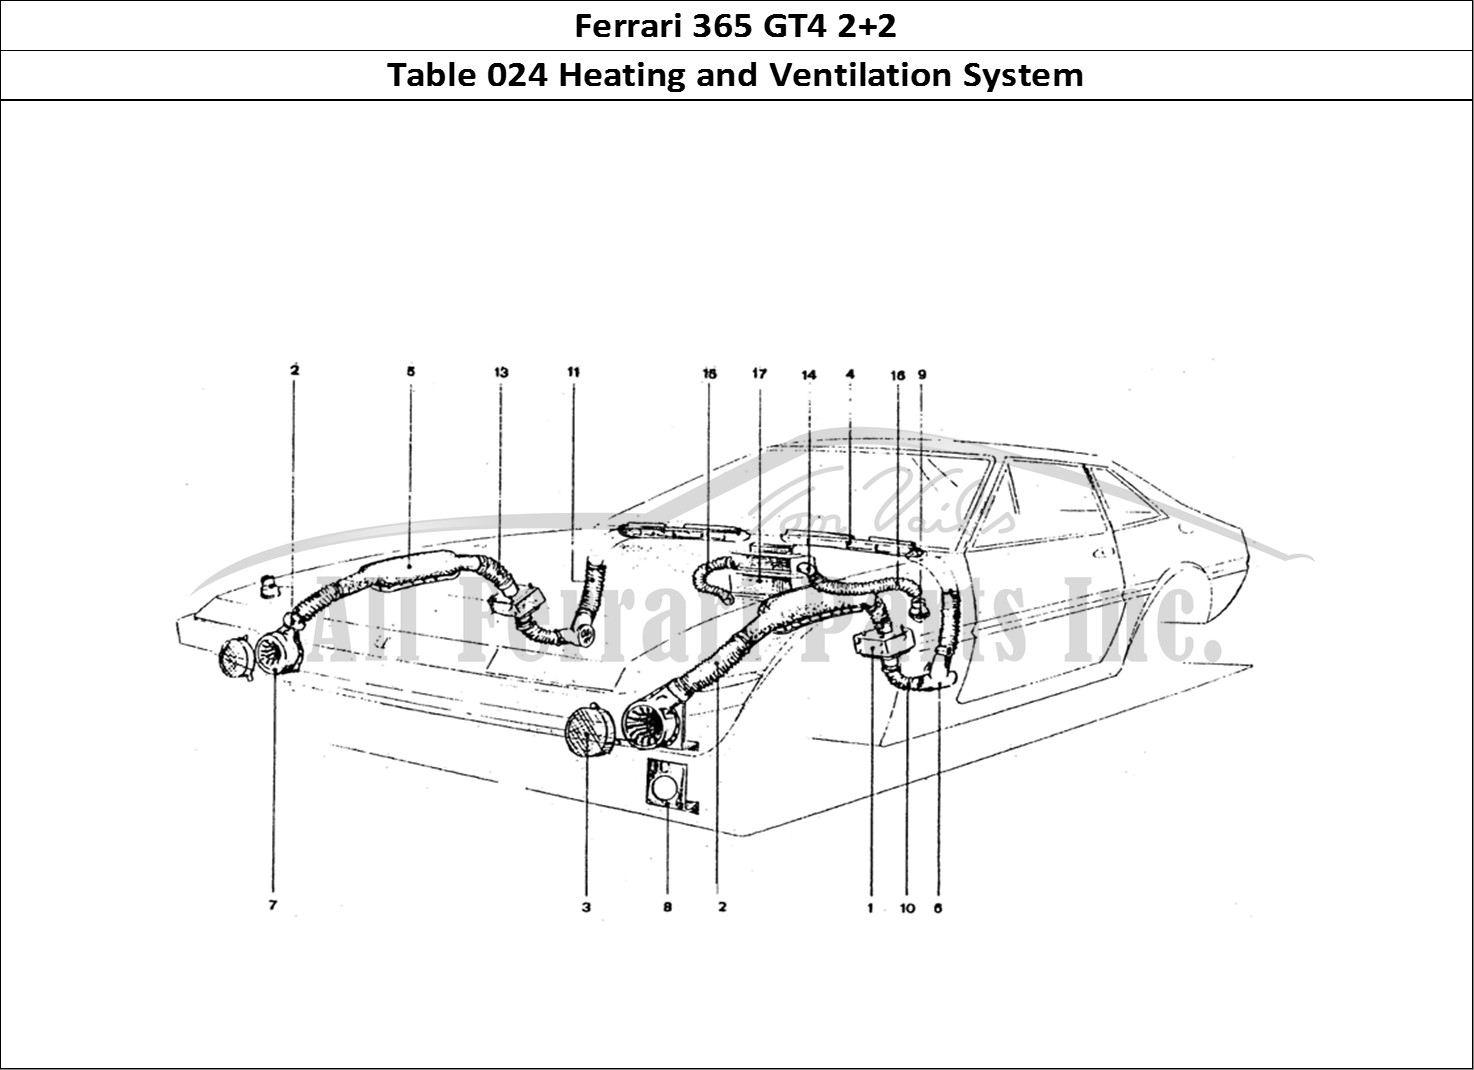 Ferrari Parts Ferrari 365 GT4 2+2 Coachwork Page 024 Heaters & Blowers